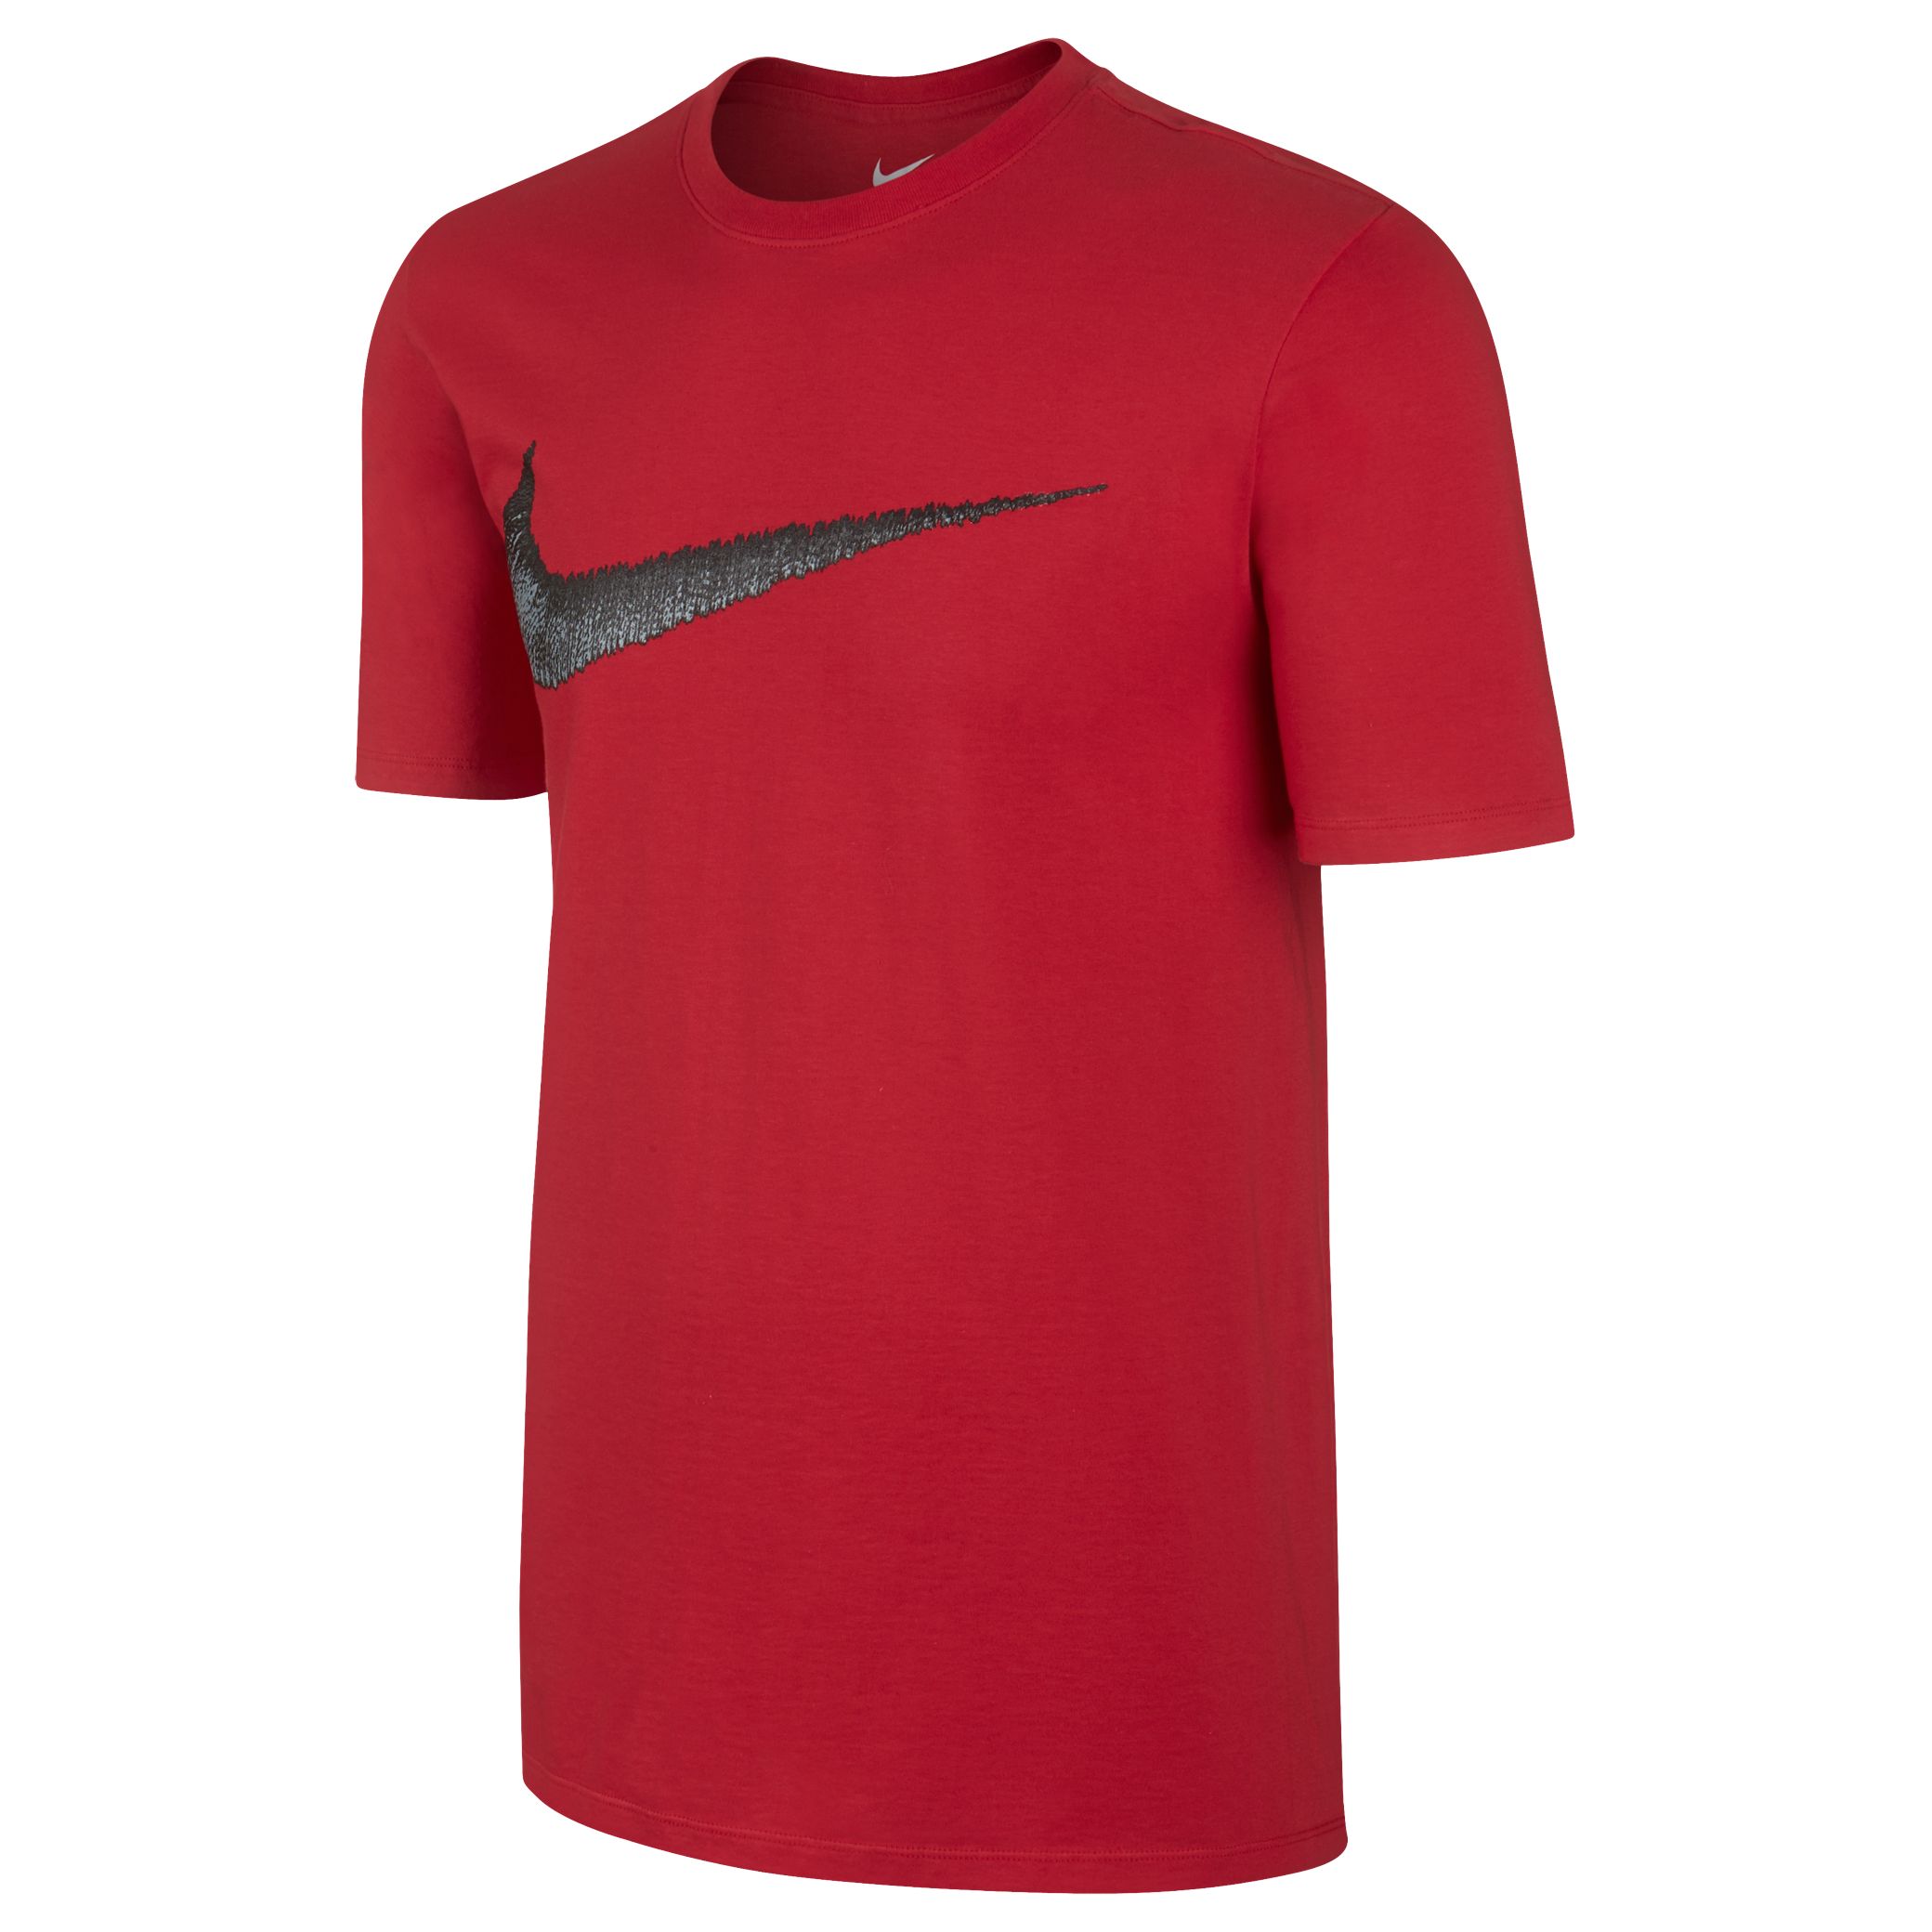 Nike Sportswear Swoosh Cotton T-Shirt, Red/Black, L